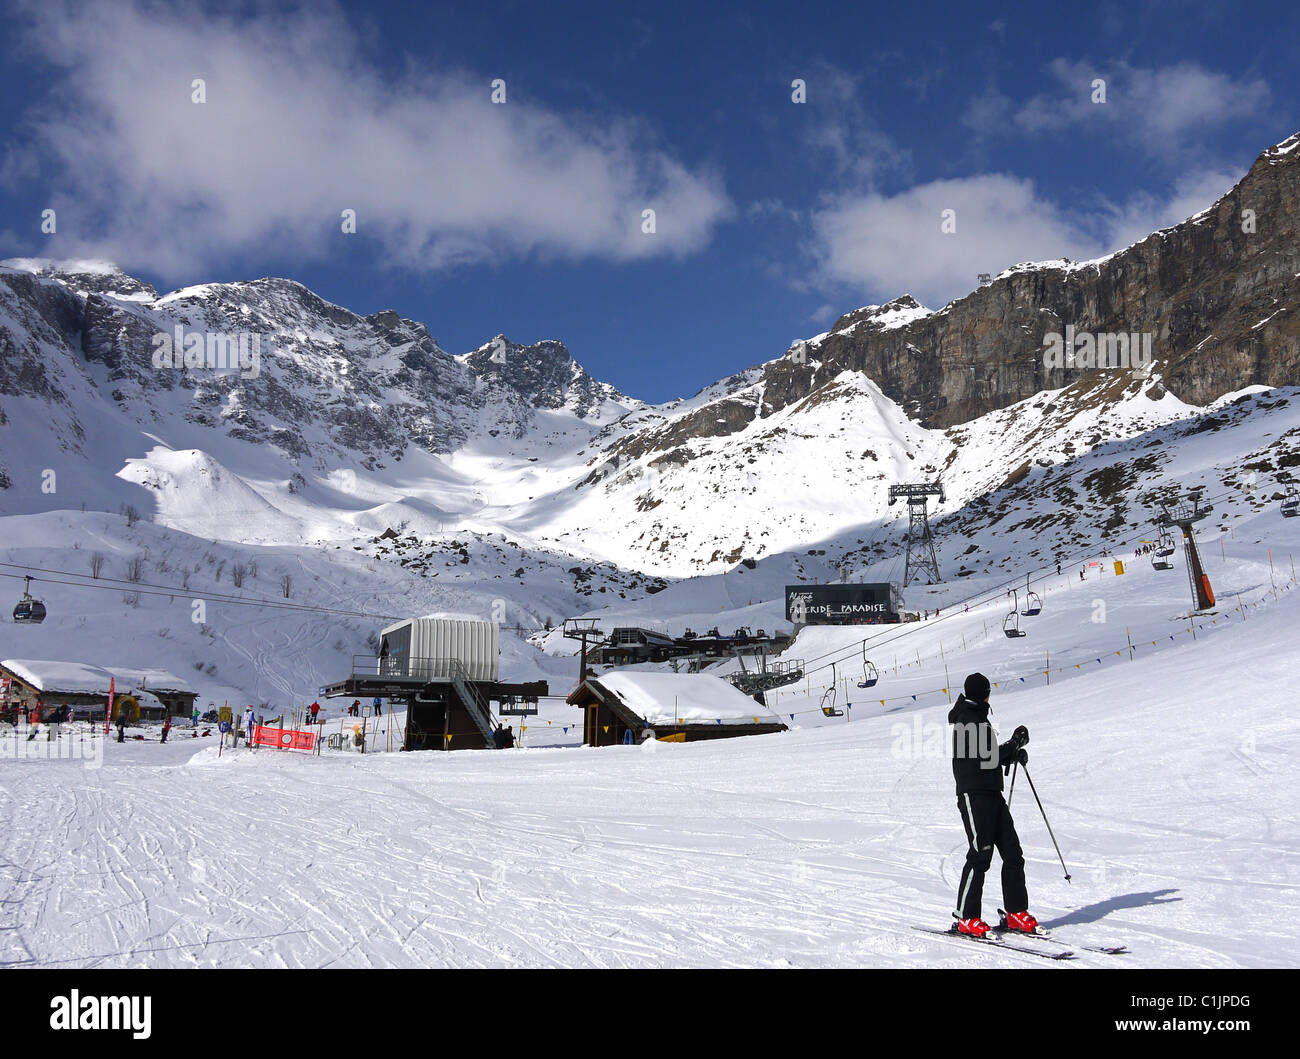 Alagna ski resort Italy Stock Photo: 35448156 - Alamy